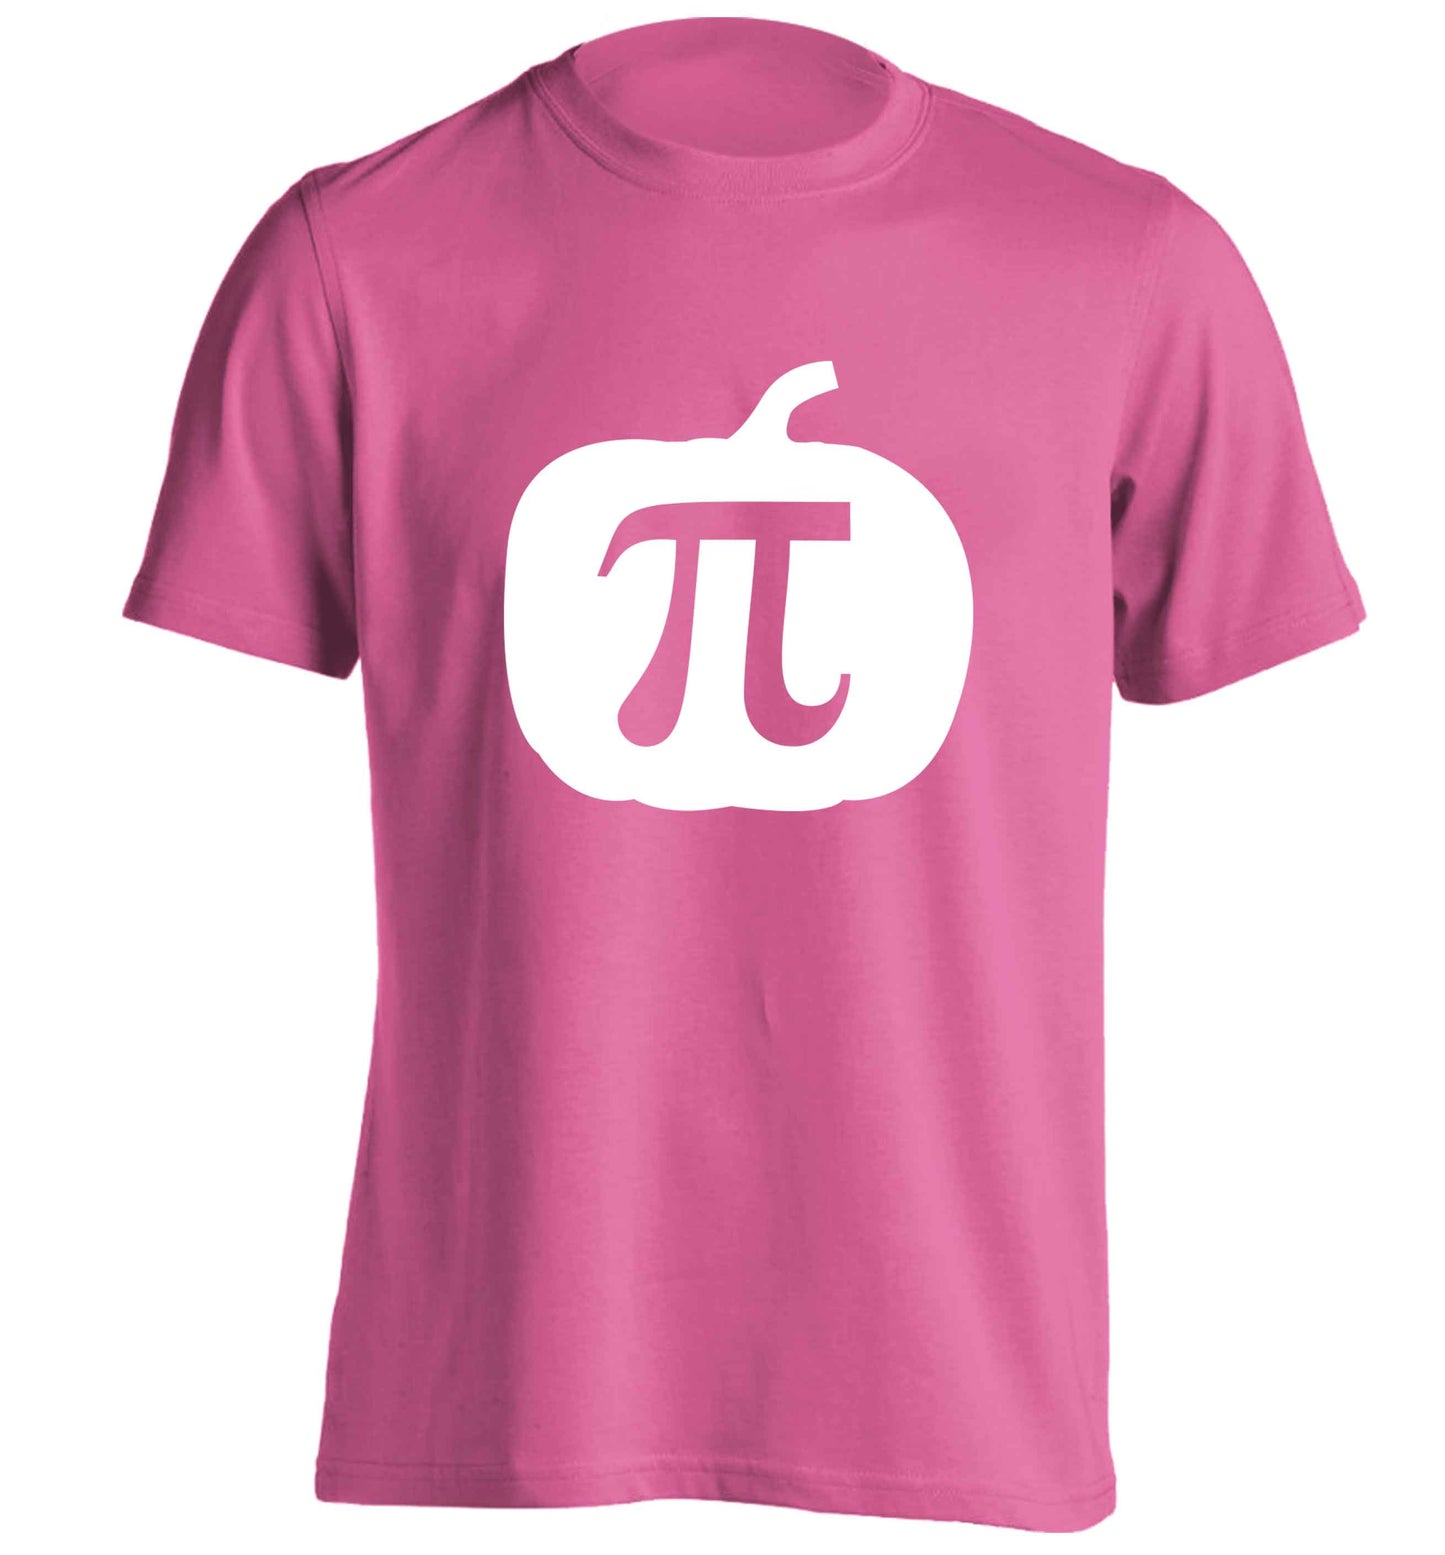 Pumpkin Pie adults unisex pink Tshirt 2XL